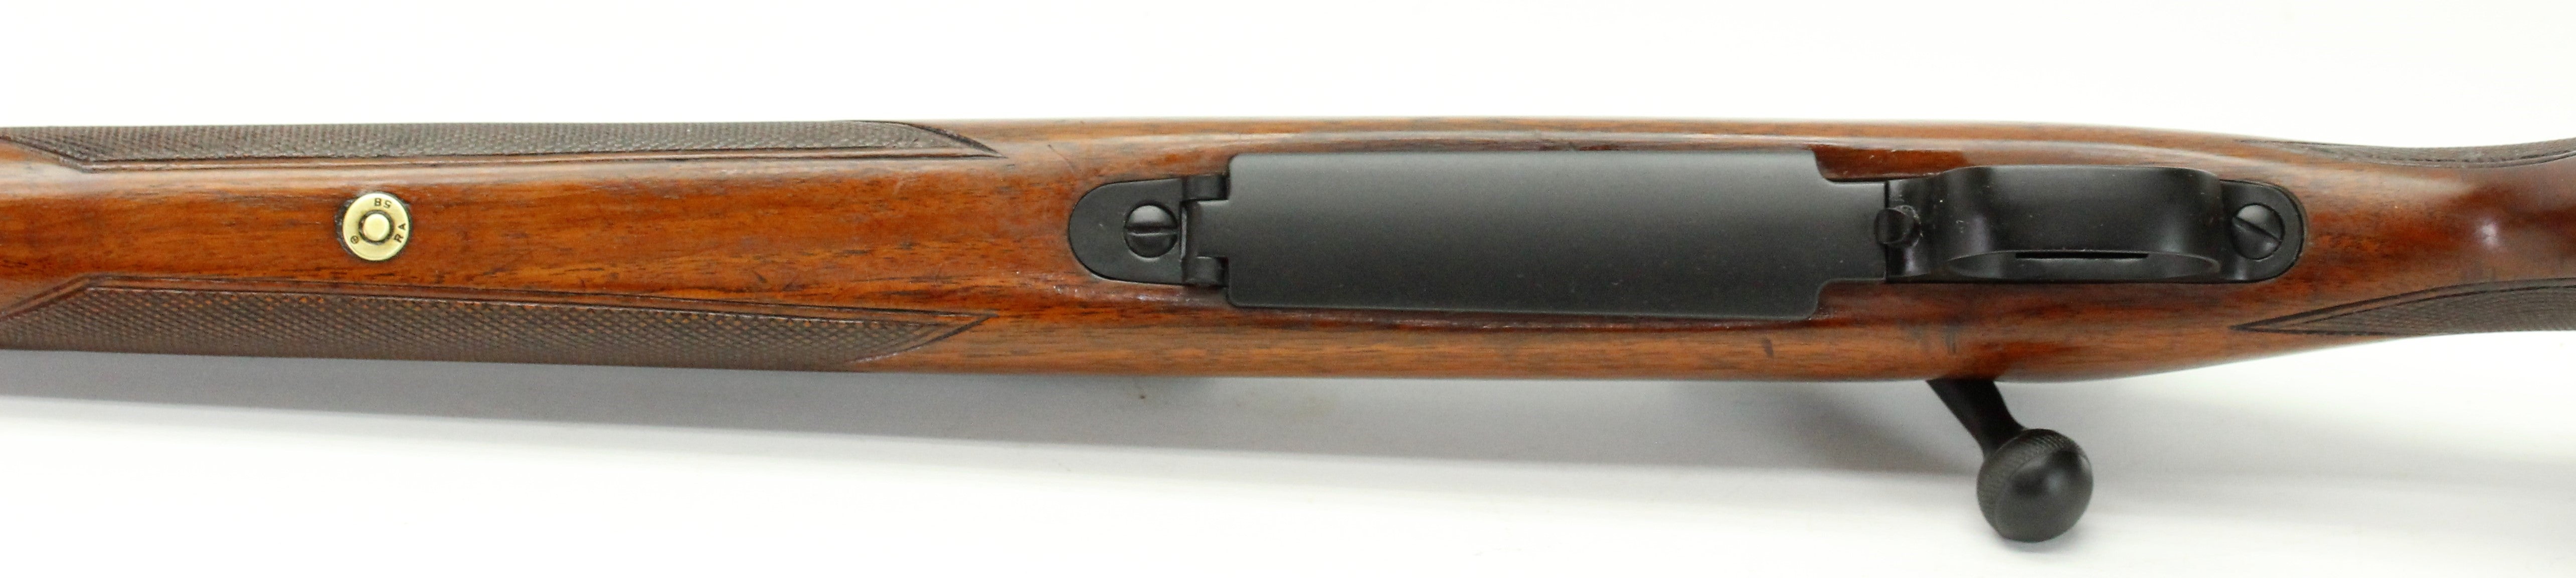 Custom Rifle Build - Van Orden Sniper Tribute Rifle